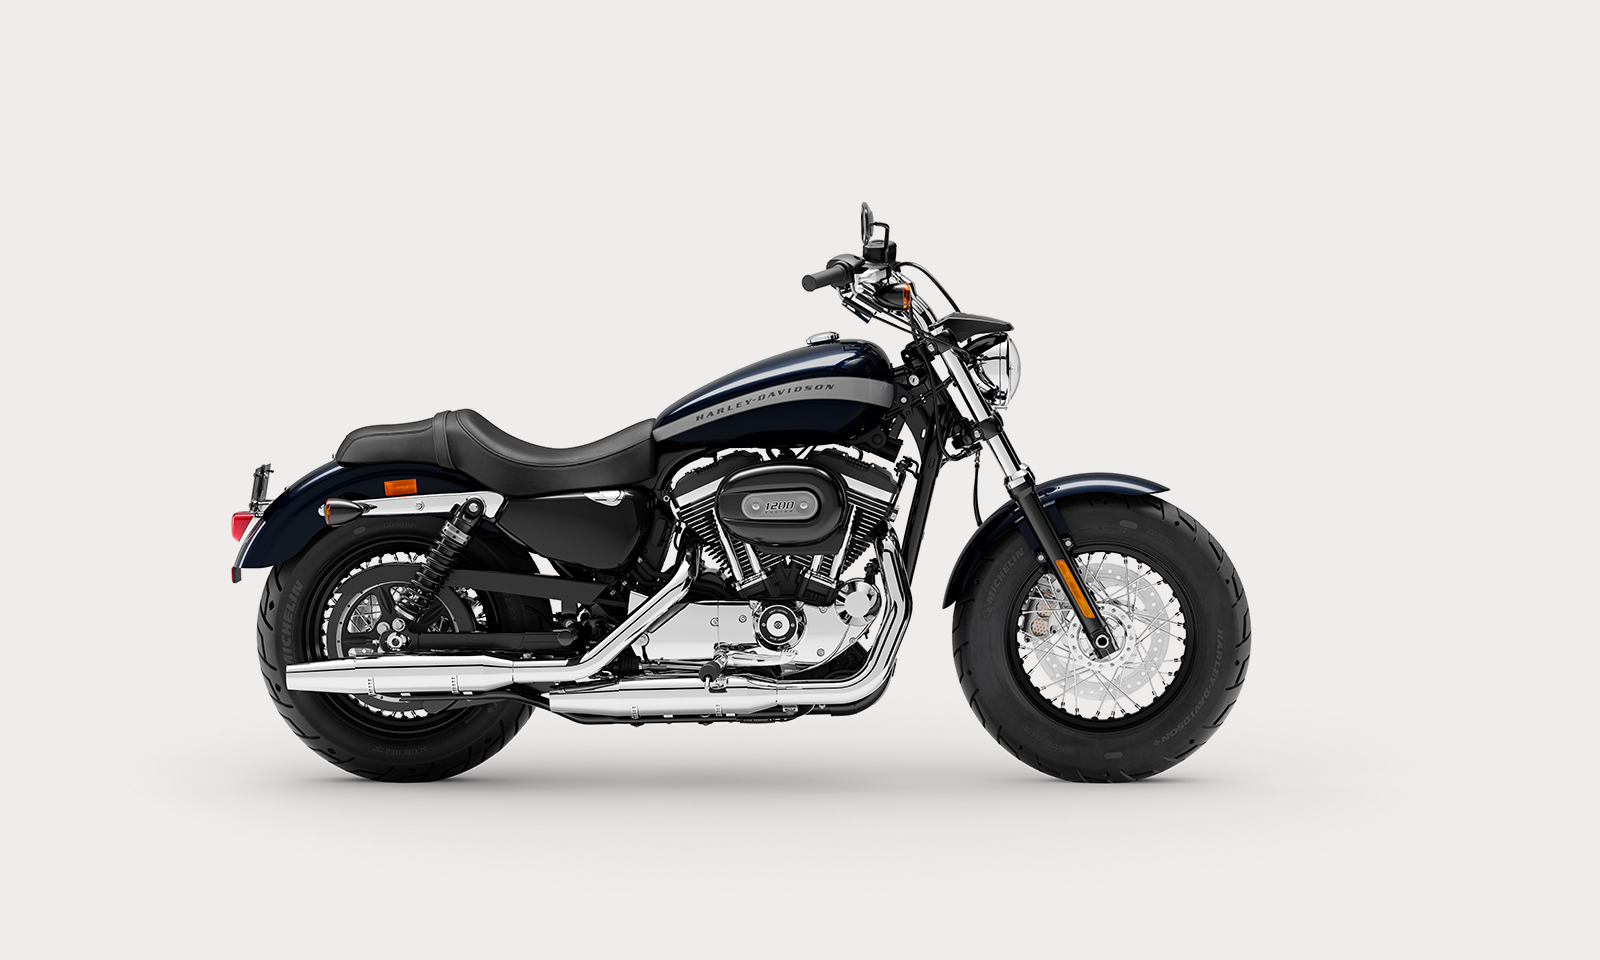 2020 Harley Davidson 1200 Custom Motorcycle Harley Davidson United Kingdom